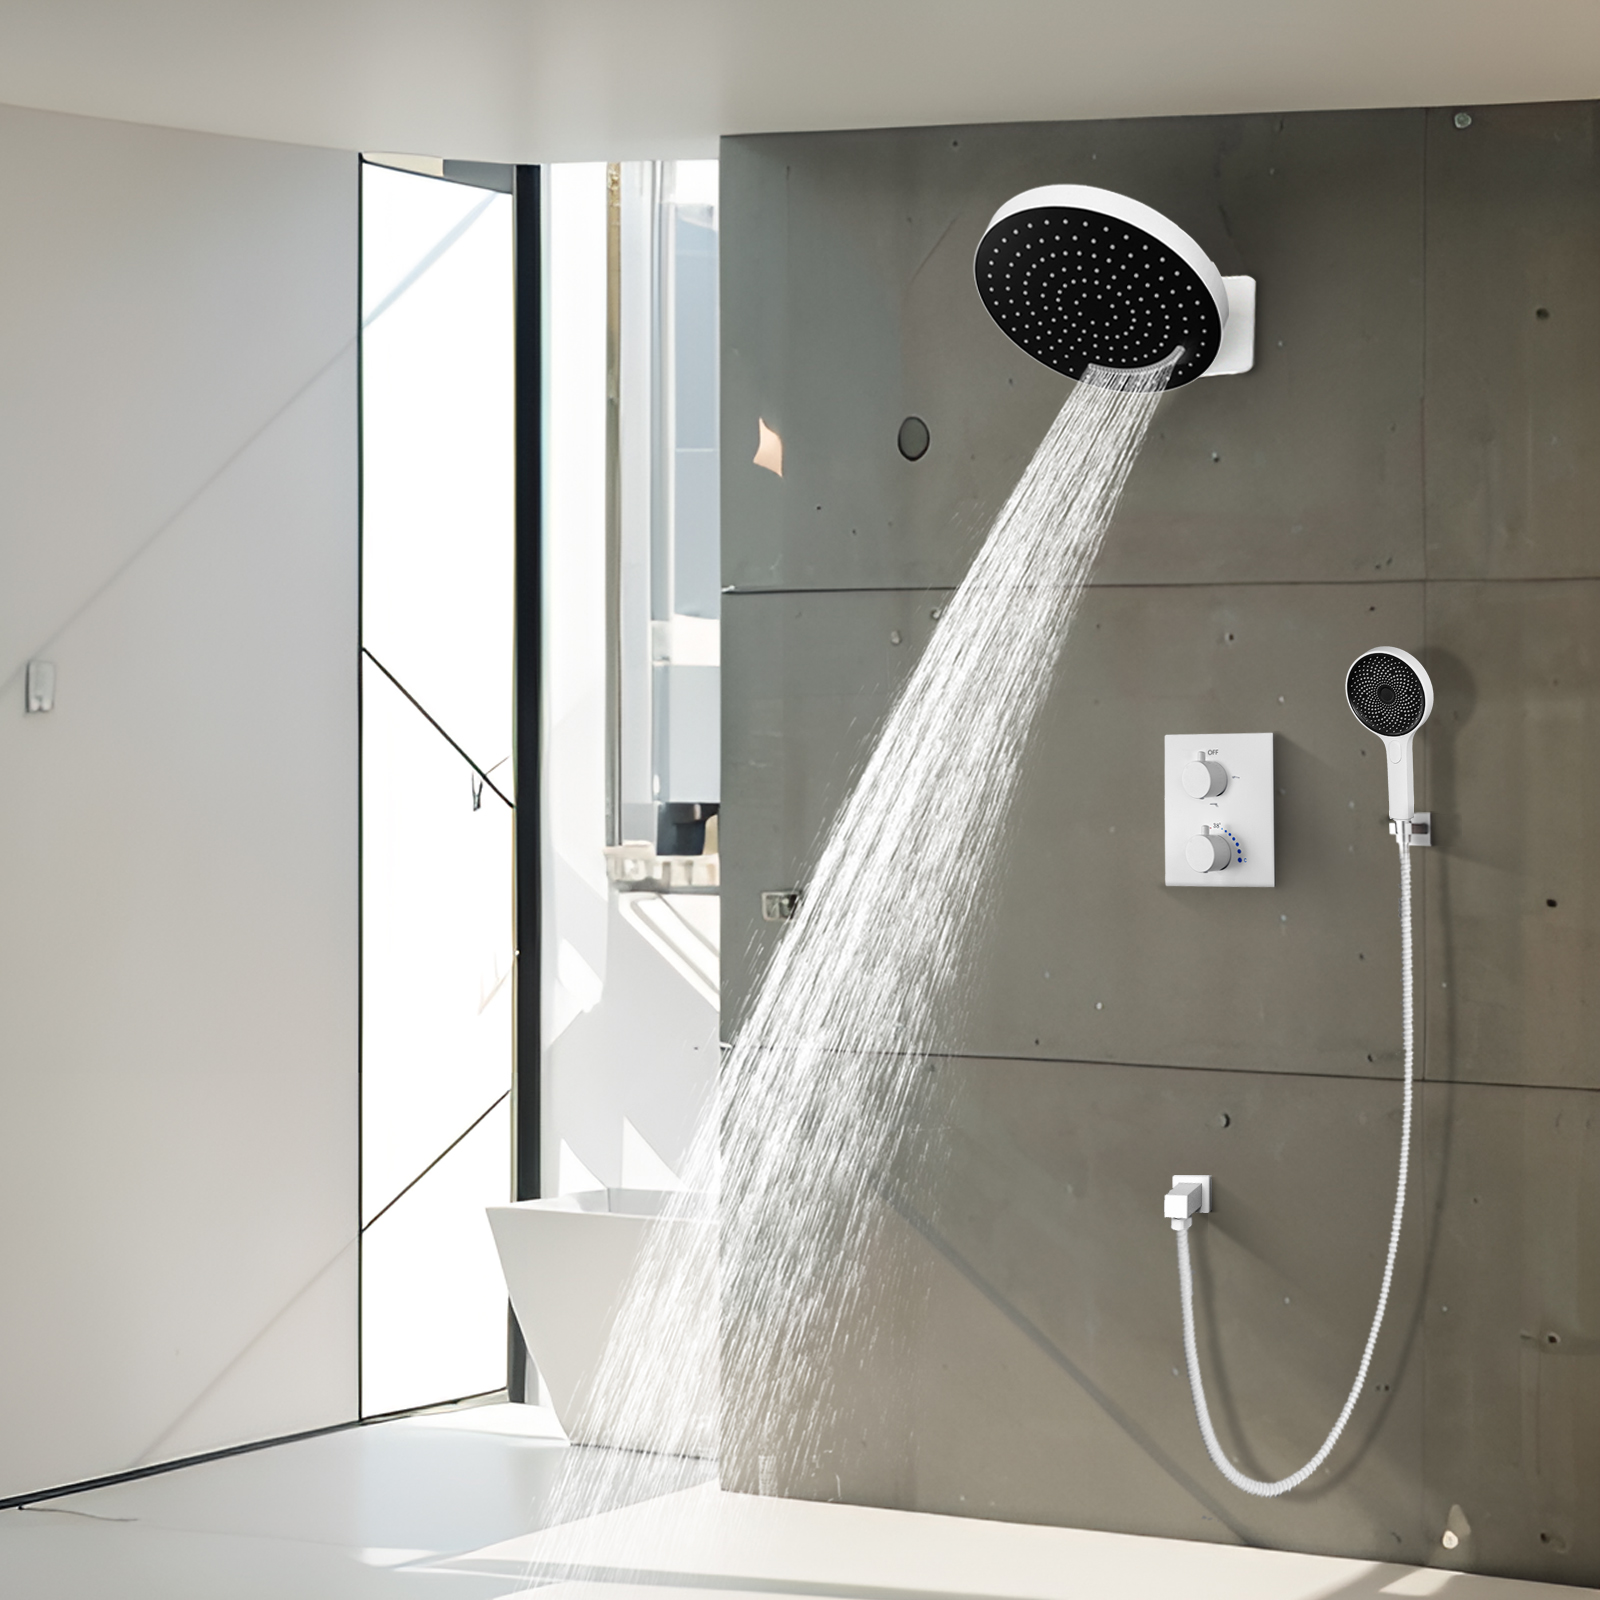 Sistemas de cabezal de ducha de baño, fabricante de sistema de grifo híbrido de temperatura tipo perilla blanca mattic 